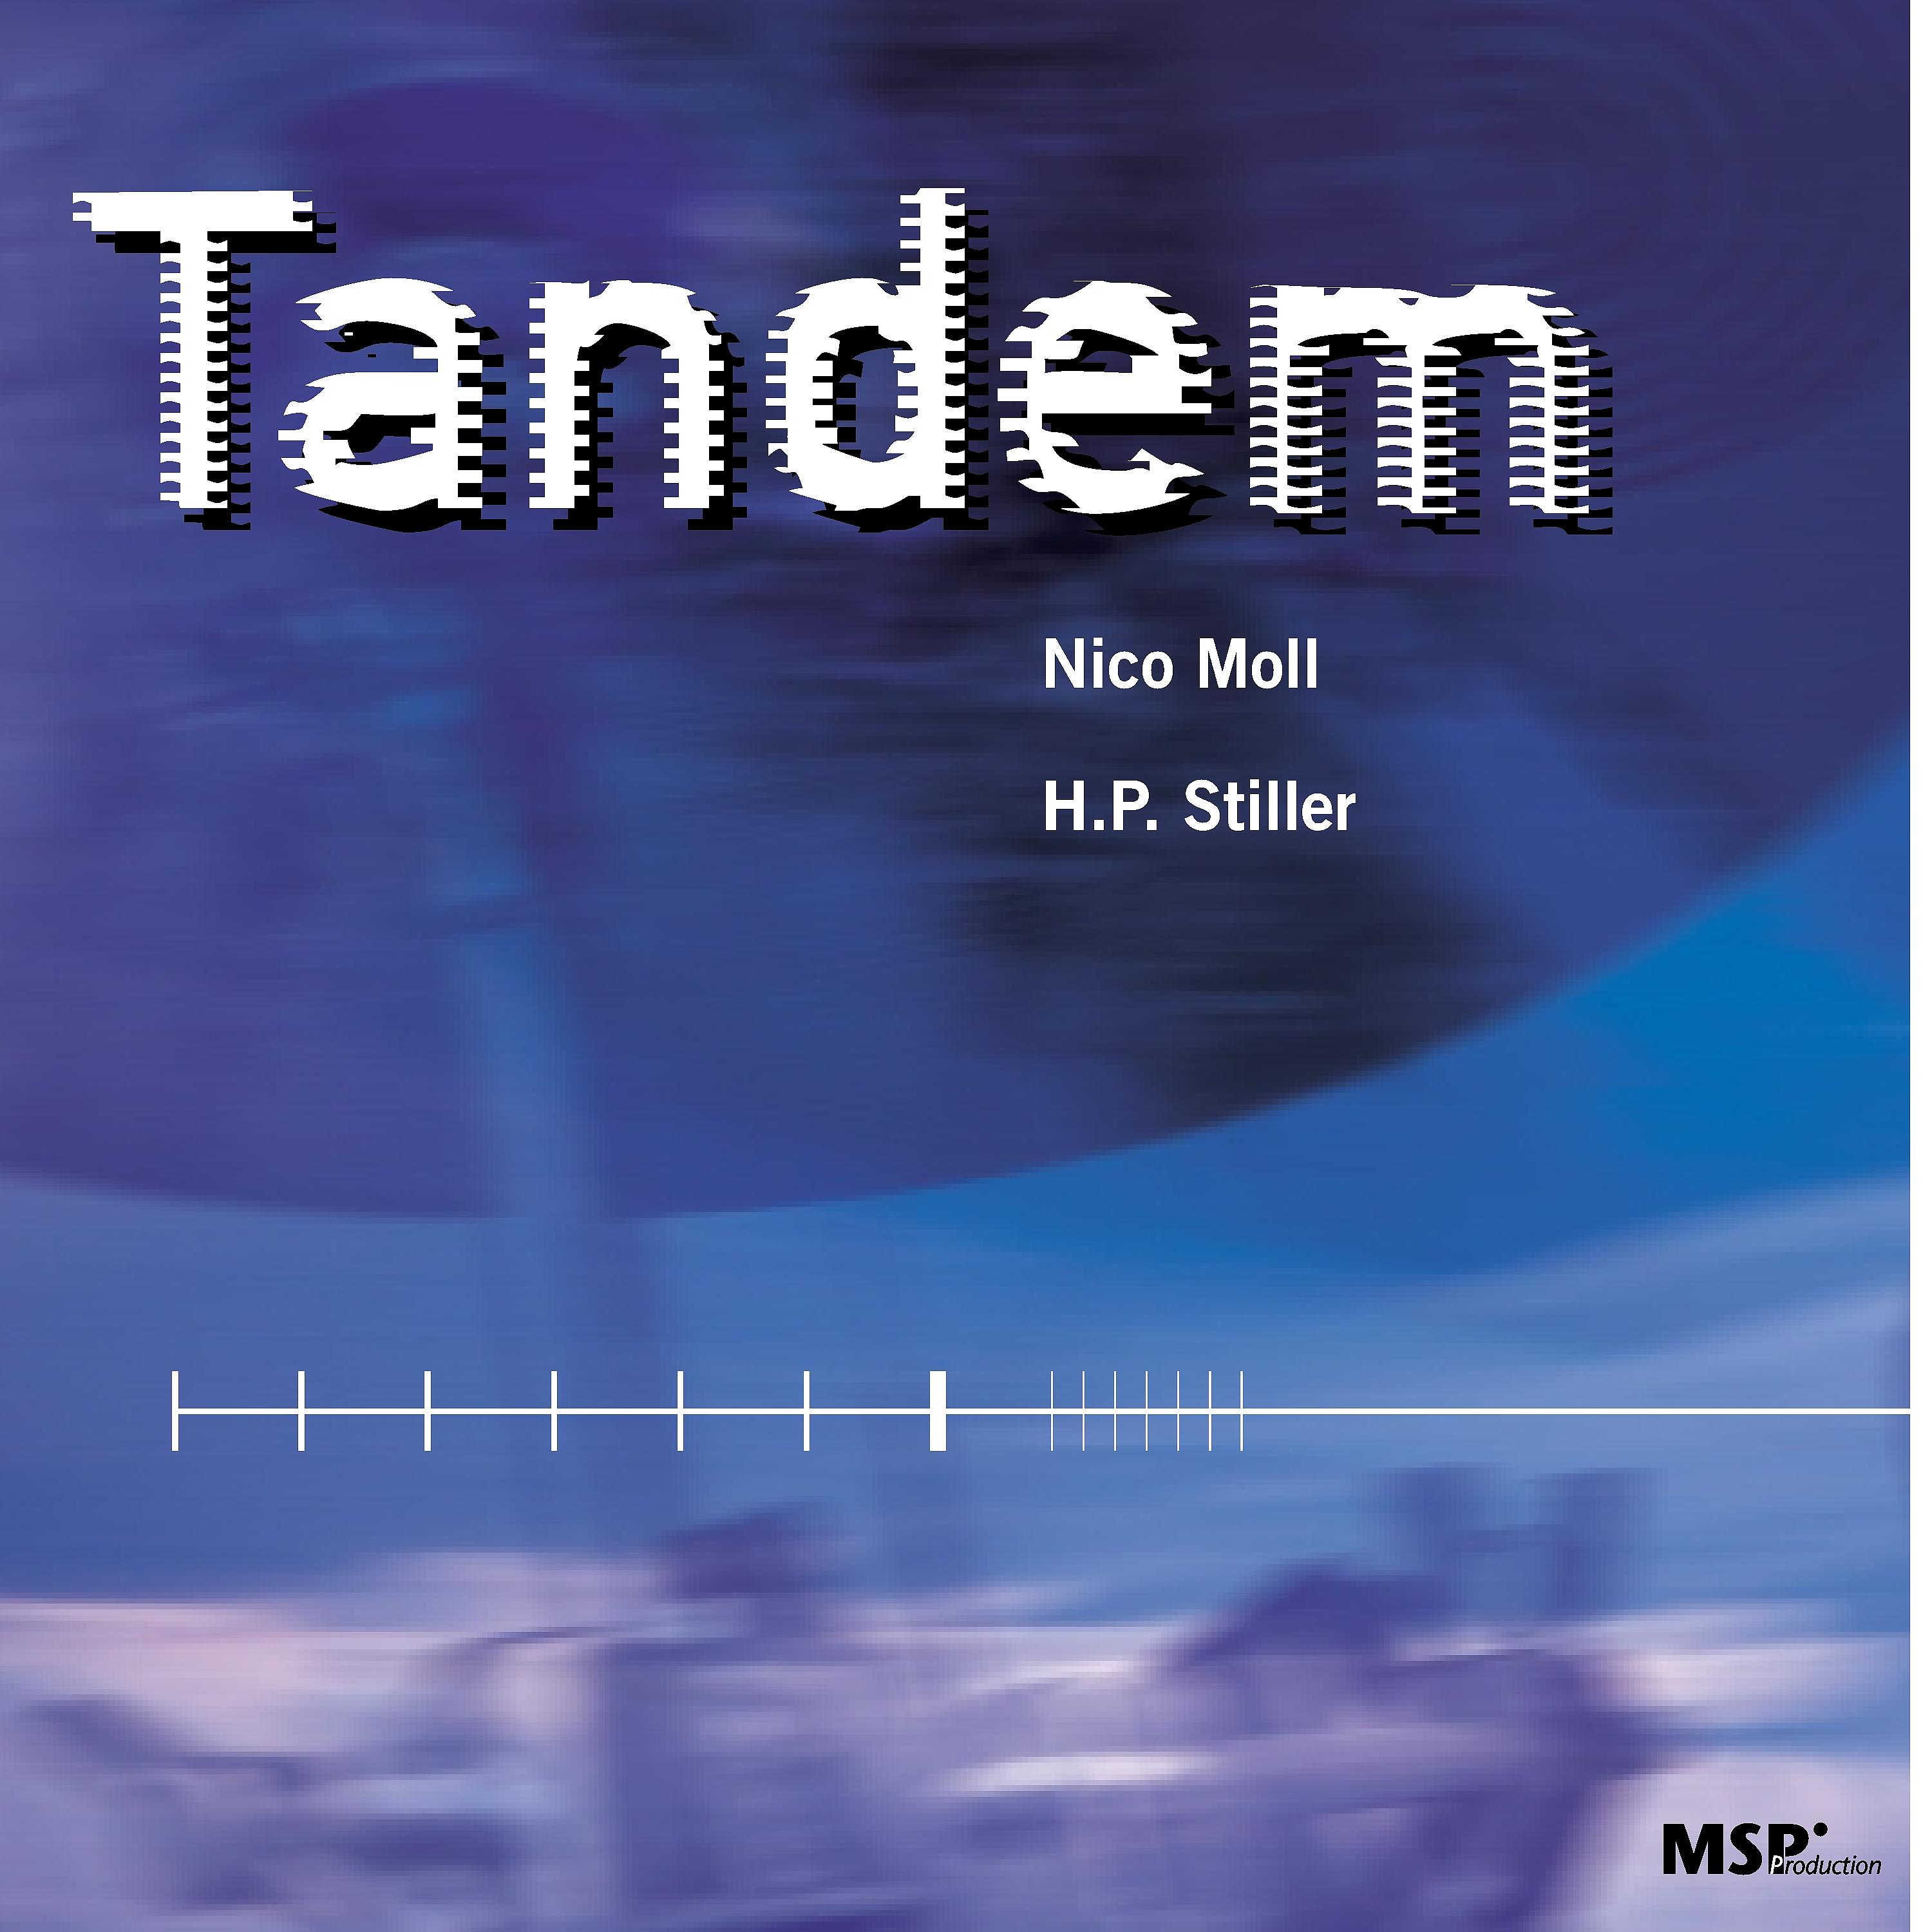 Постер альбома Tandem